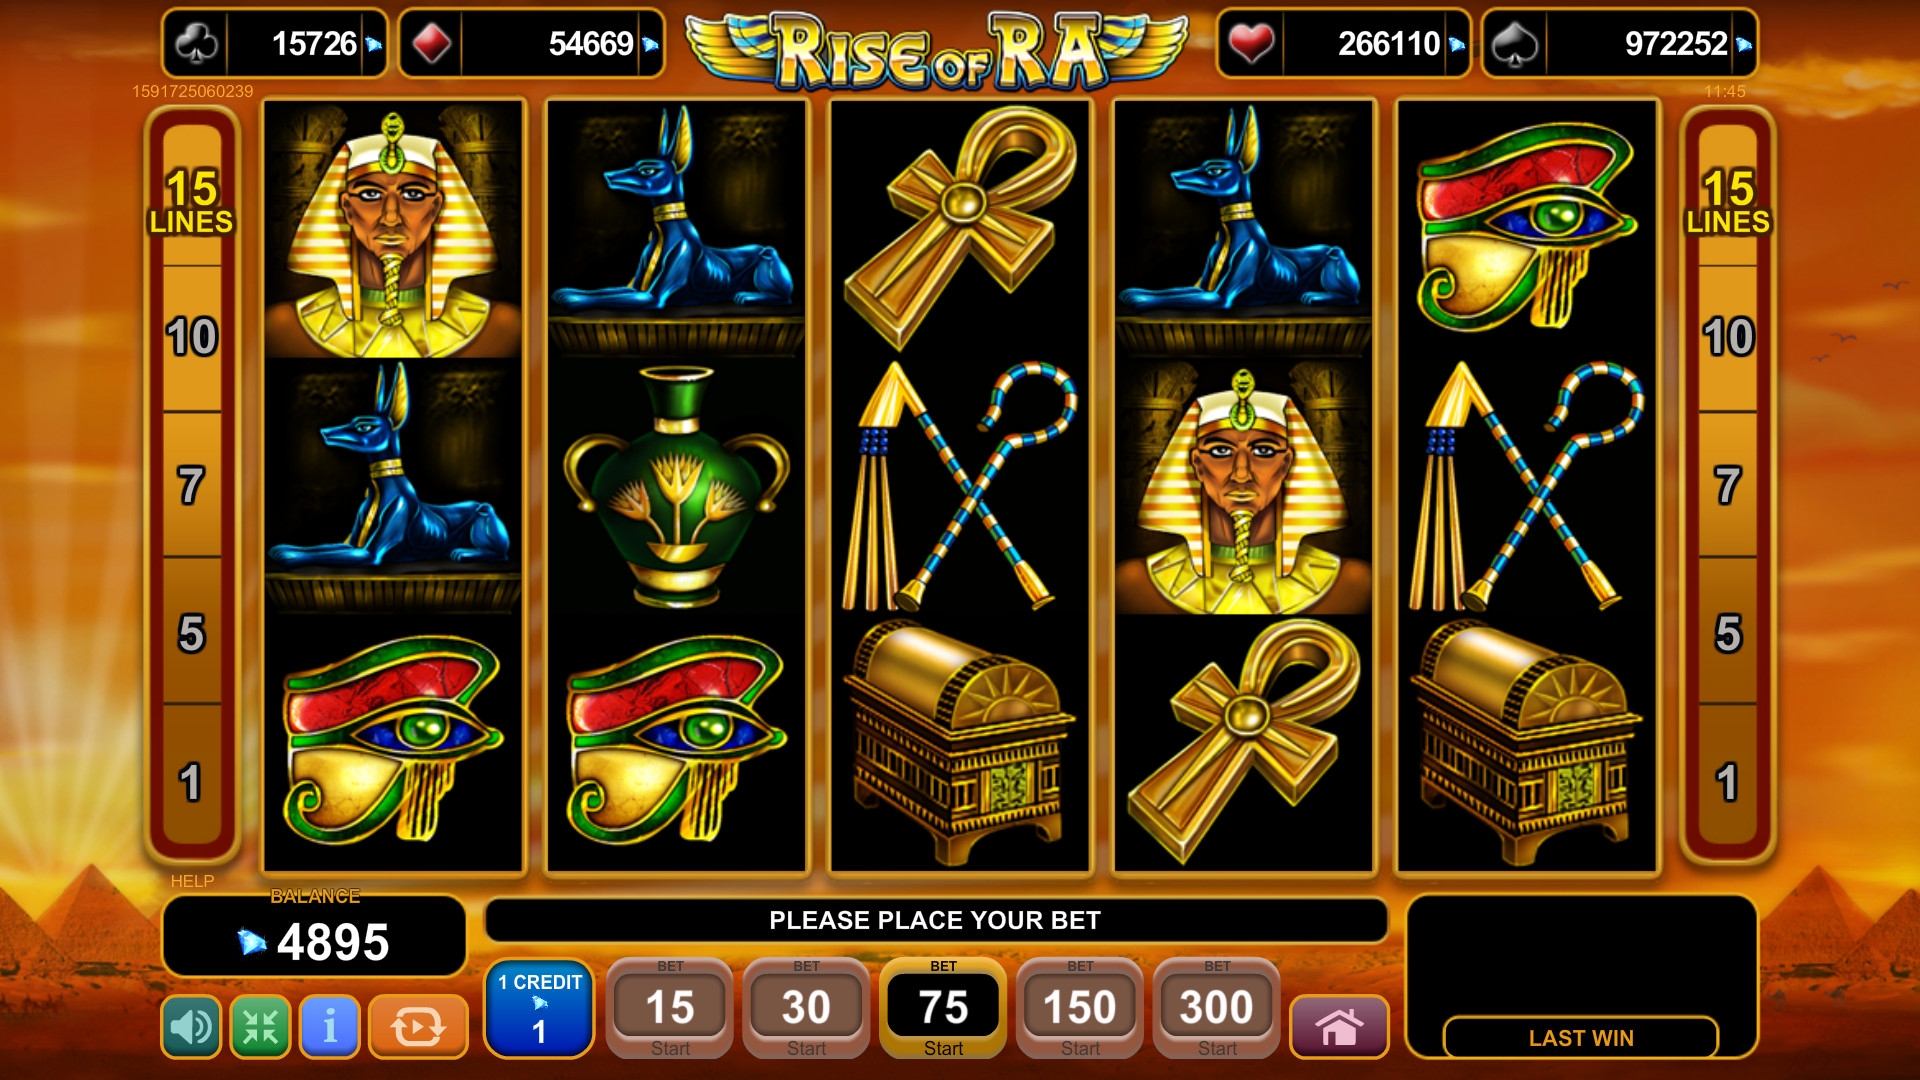  rise of ra slot machine online 